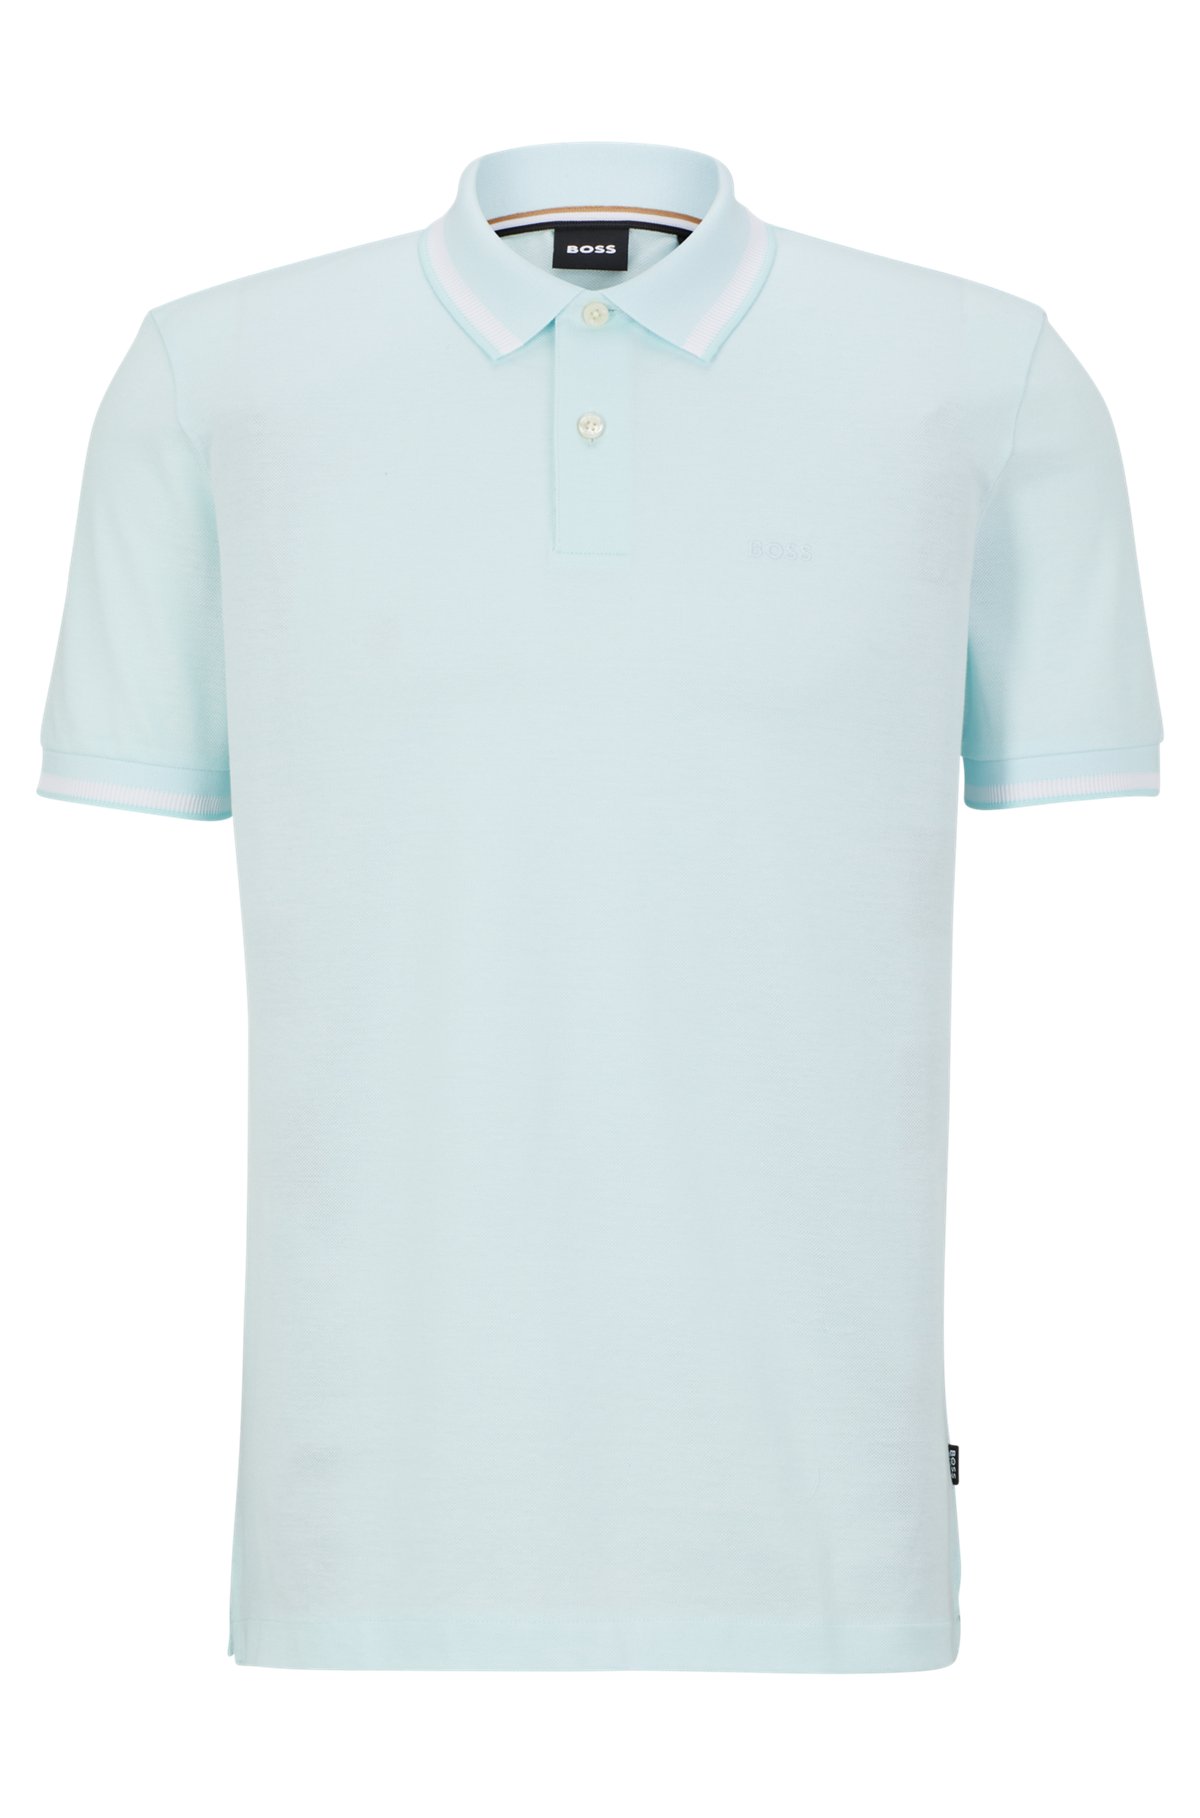 Logo-embroidered polo shirt in Oxford cotton piqué, Light Blue